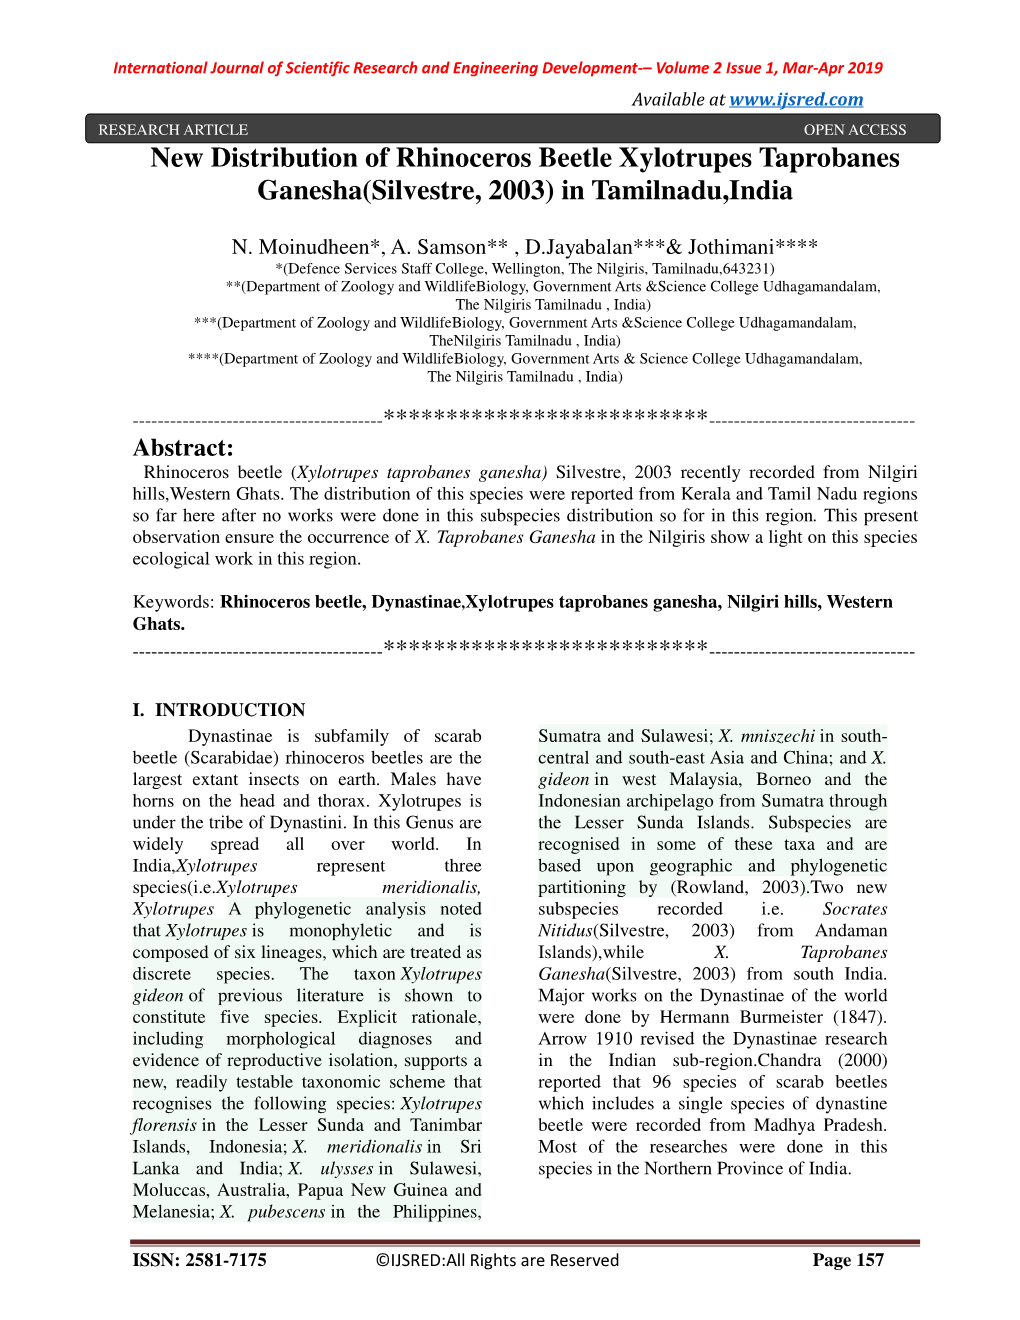 New Distribution of Rhinoceros Beetle Xylotrupes Taprobanes Ganesha(Silvestre, 2003) in Tamilnadu,India